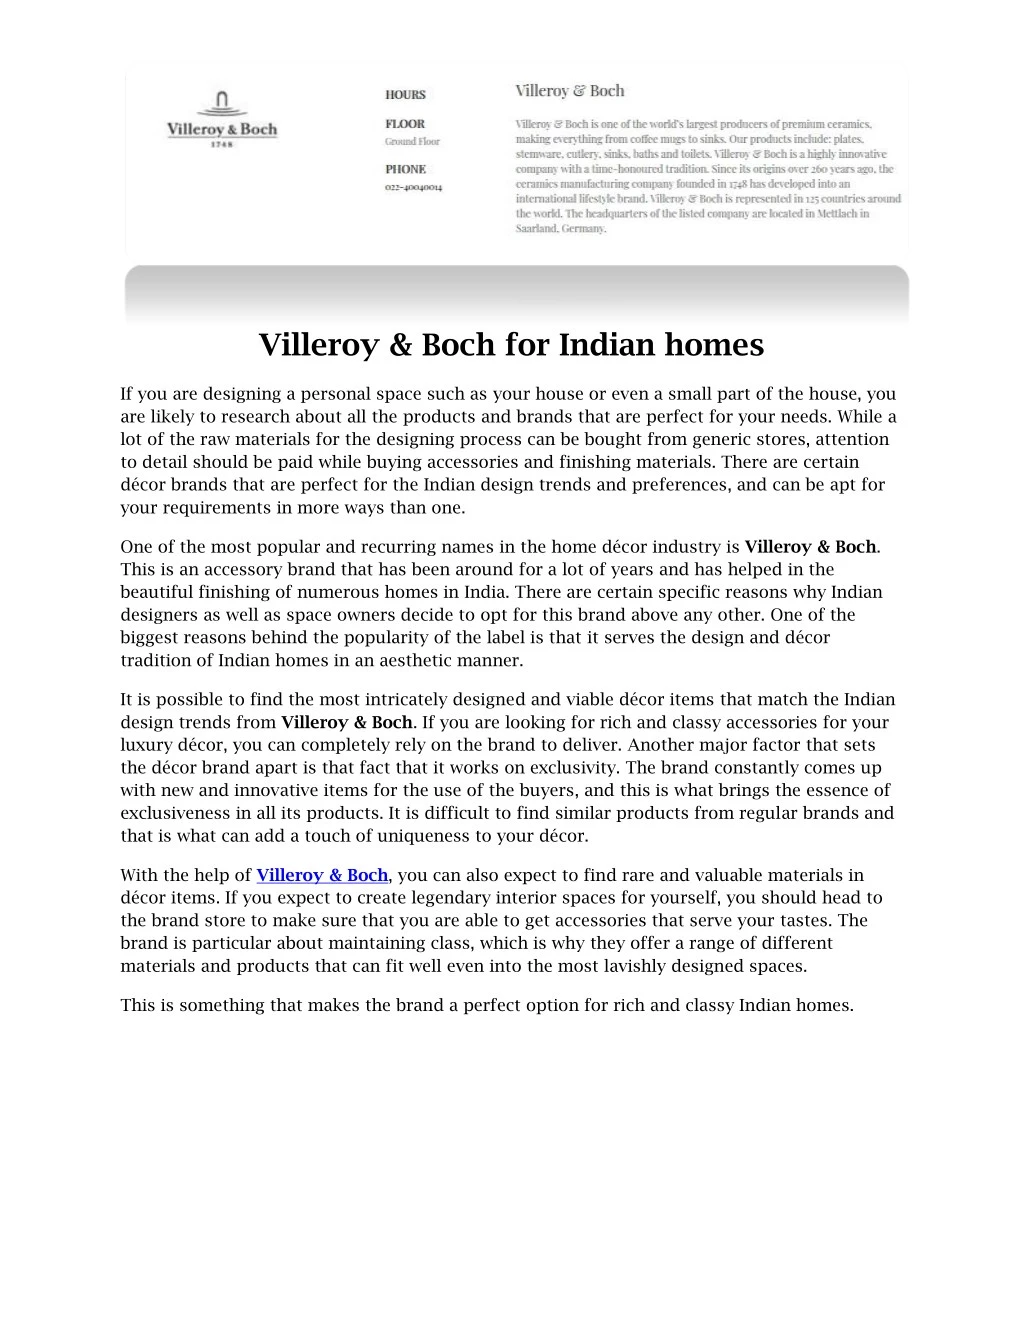 villeroy boch for indian homes